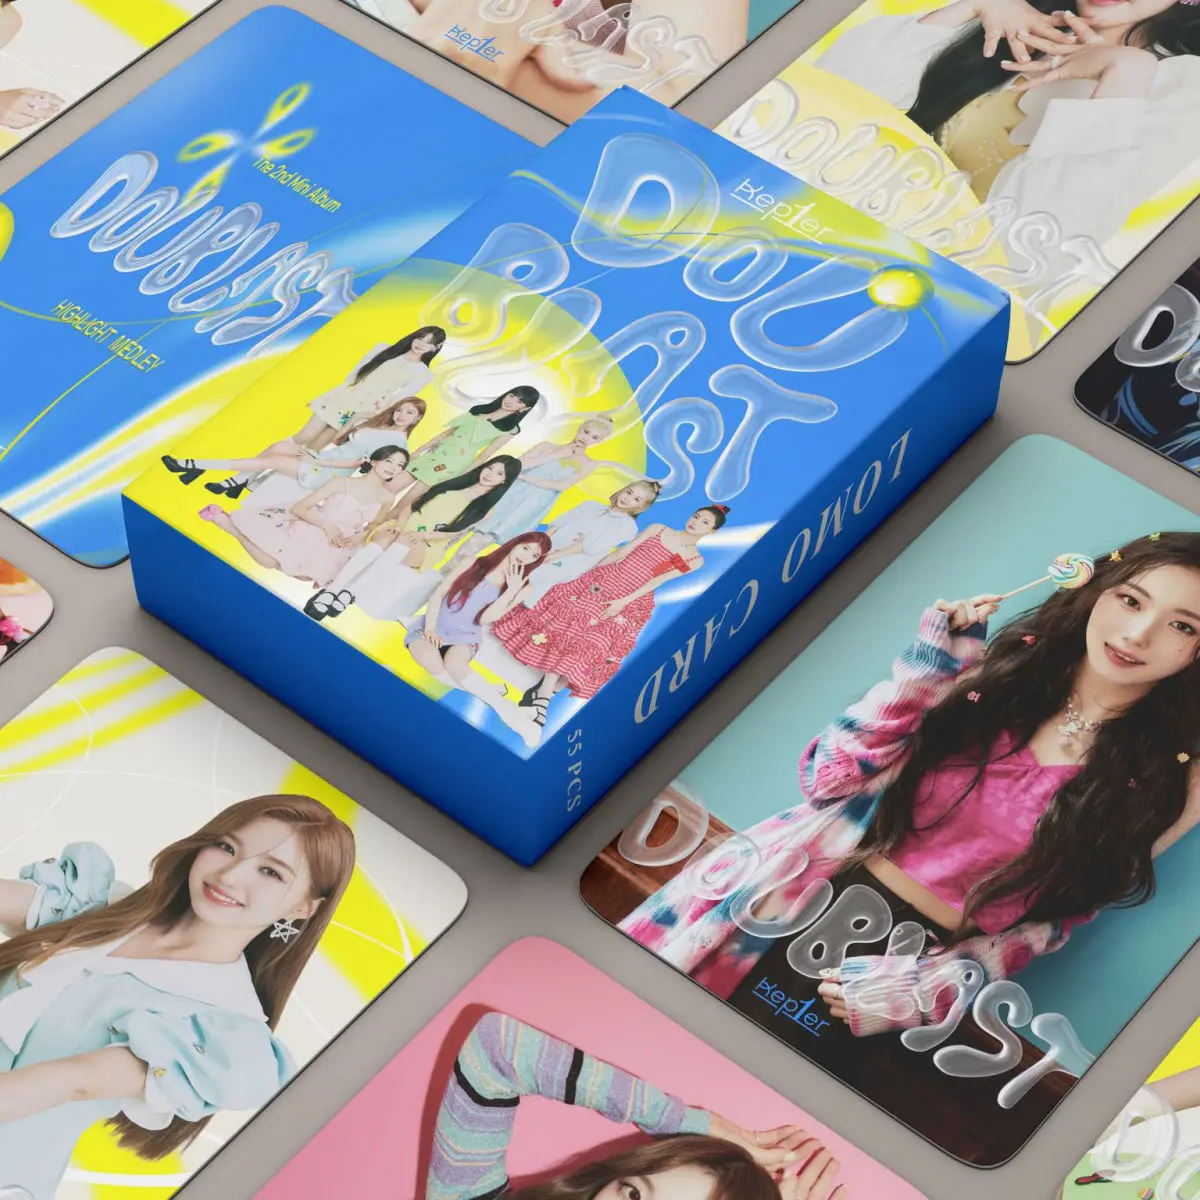 

54pcs/set Kpop Kep1er Photocards FIRST IMPACT Album Lomo Cards Girls Photo Card Postcard For Fans Collection Mashiro YUJIN YESEO